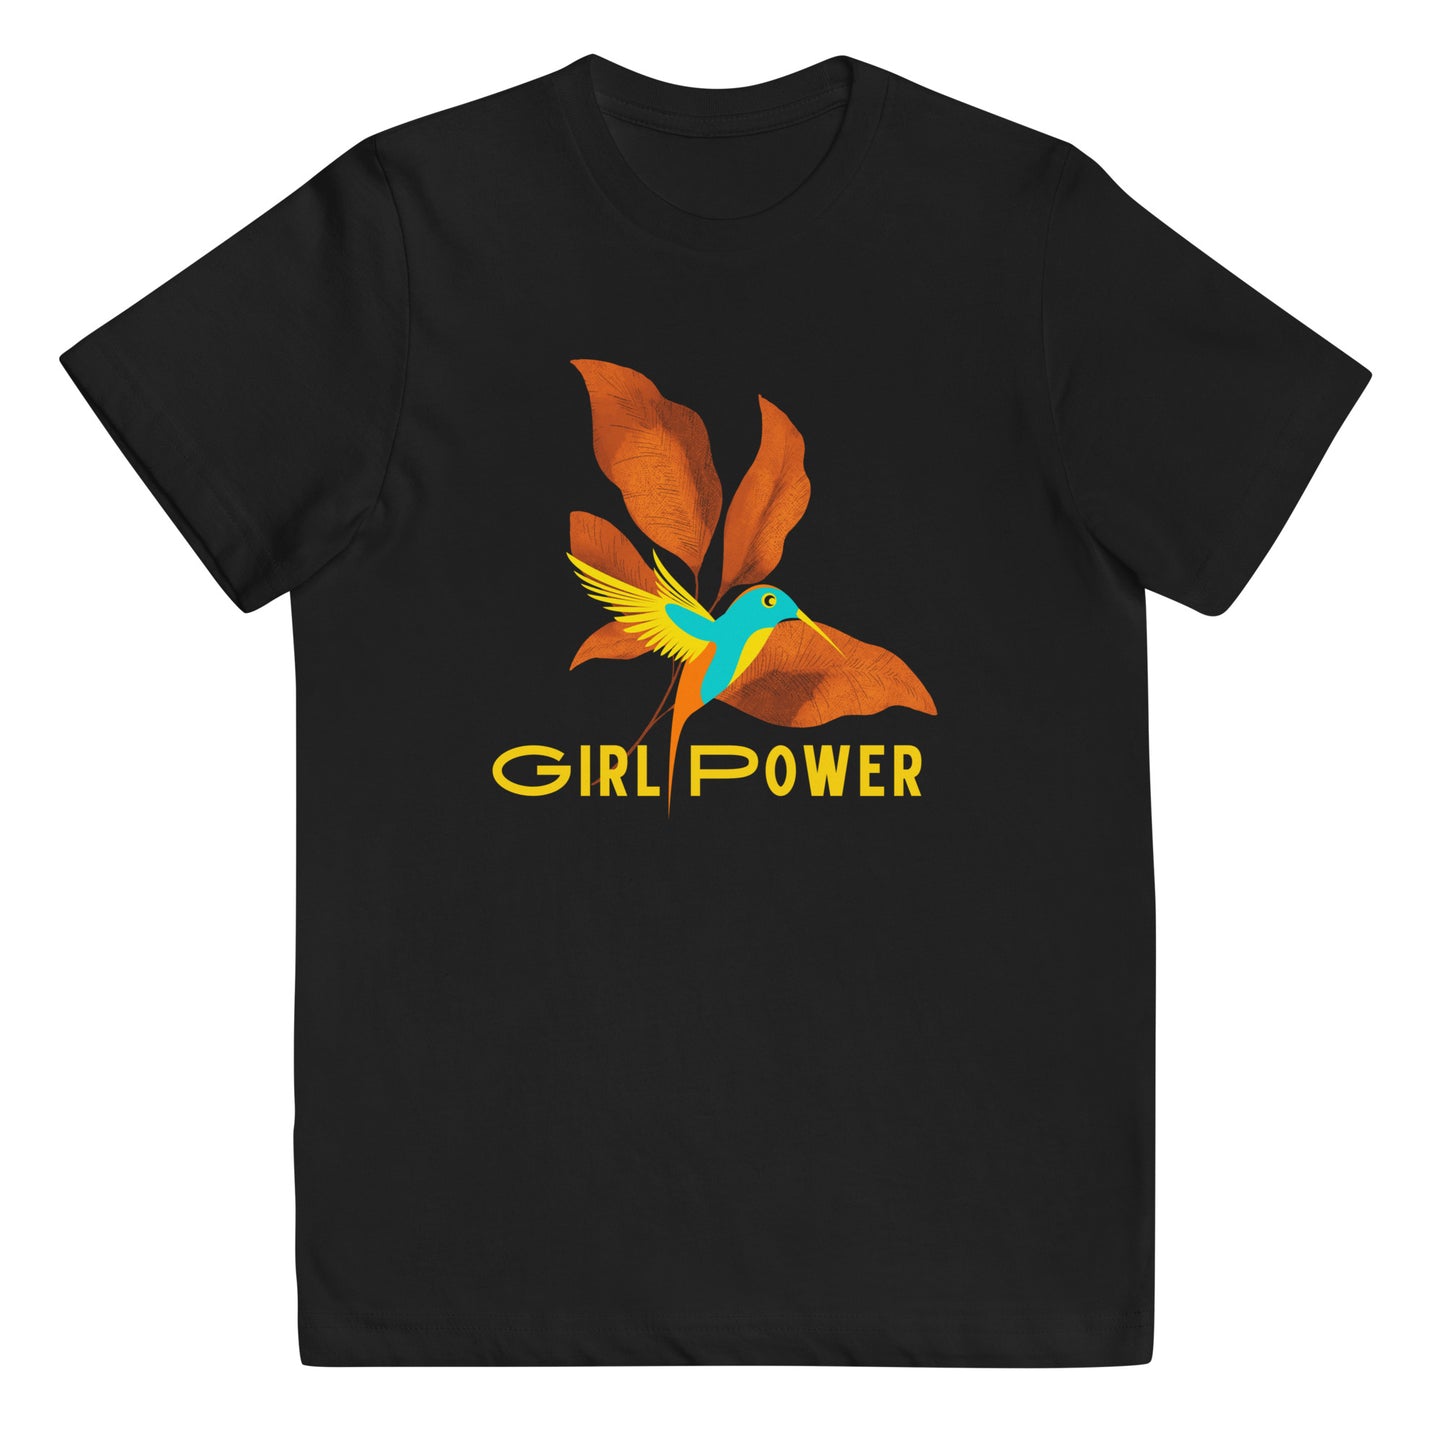 Girl Power Graphic Tee